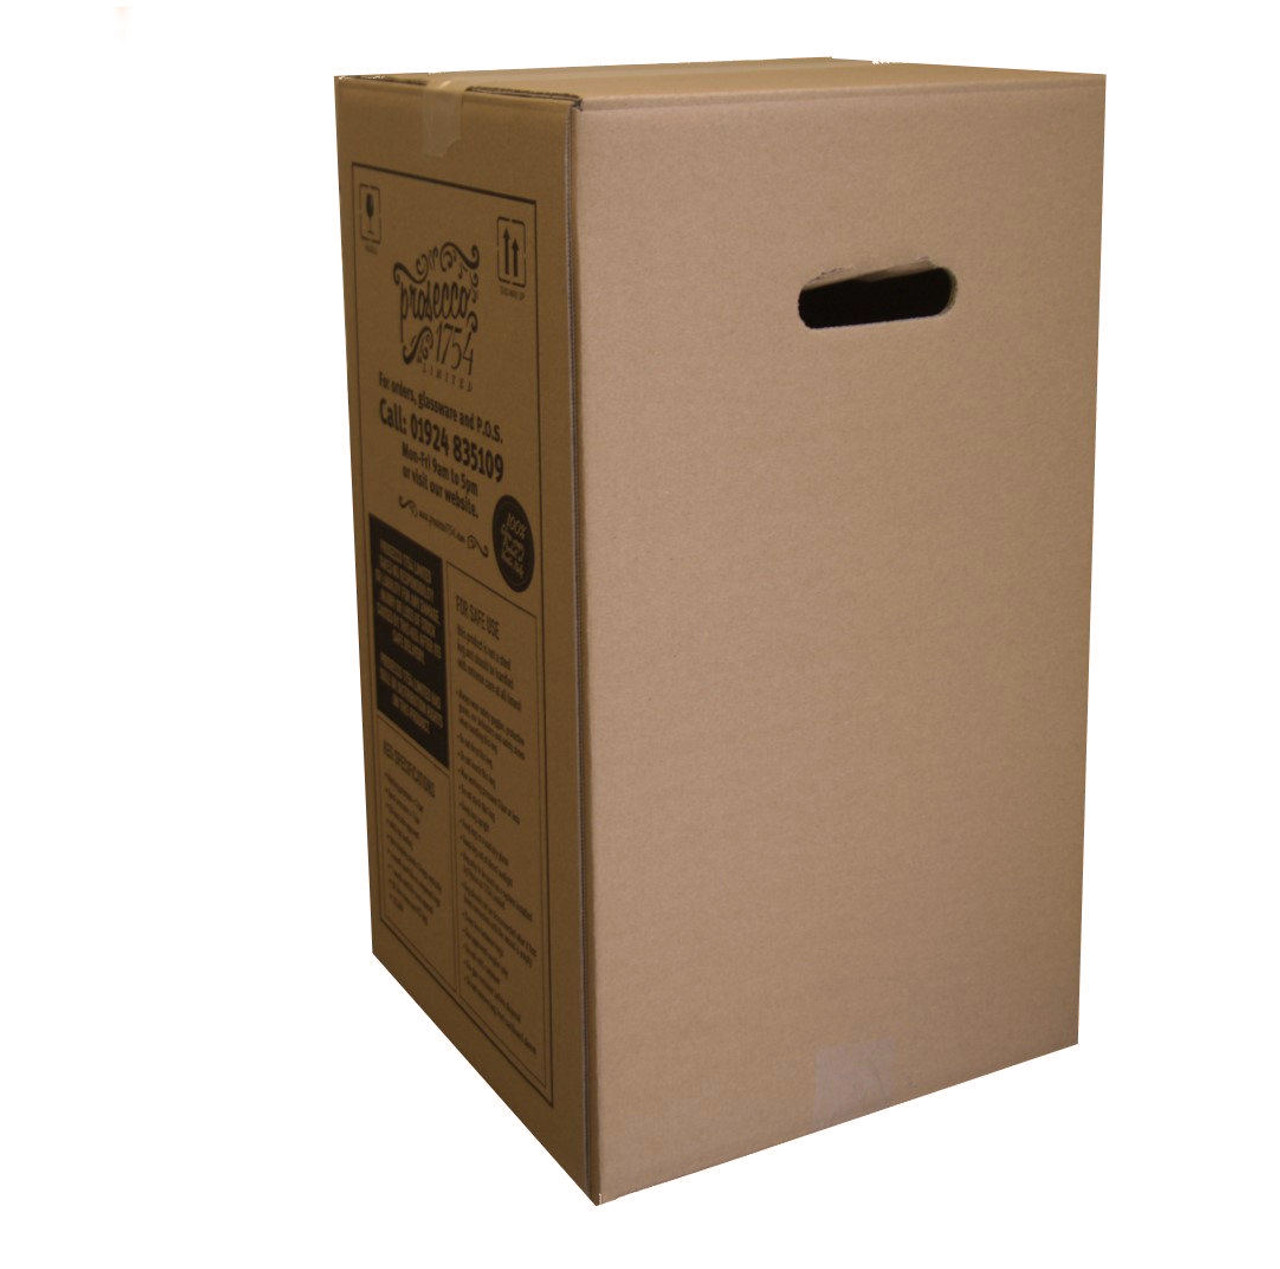 5 x Medium Storage Box ( Heavy Duty ) mis-printed cardboard  box  11.75"x 11.75"x 20.5" with carry handles 